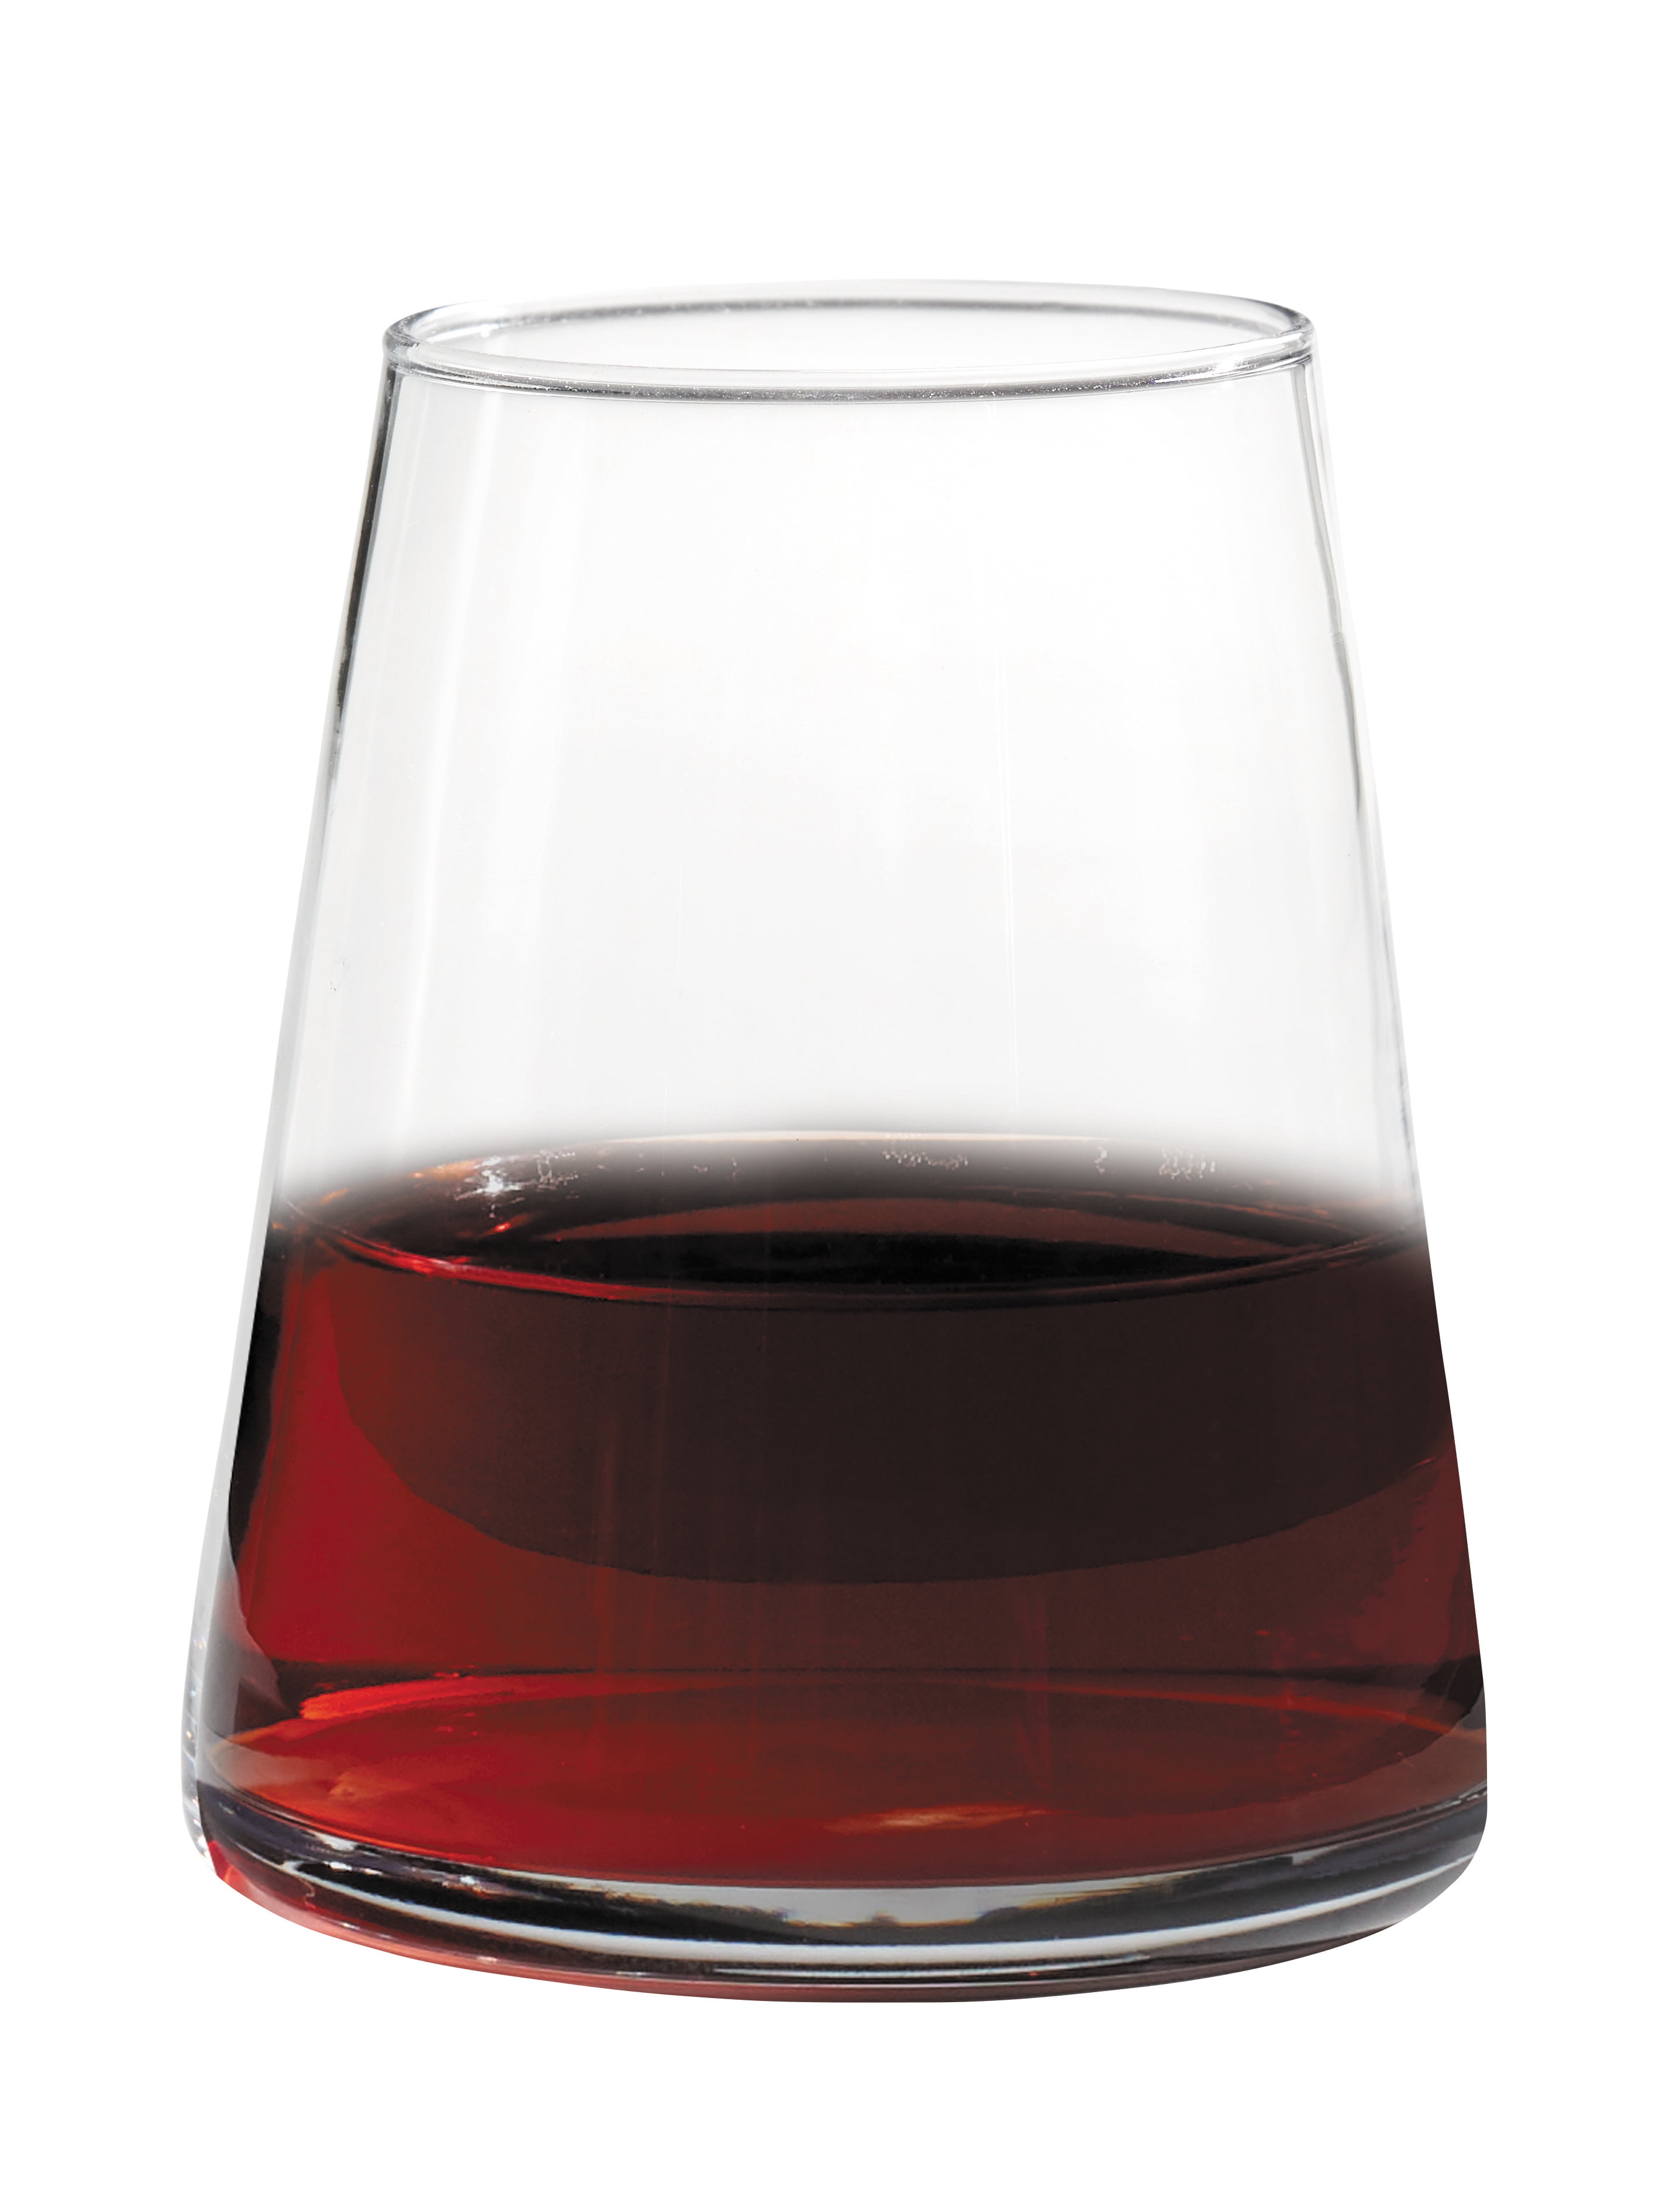 ELIXIR GLASSWARE Stemless Red Wine Glasses Set of 4 - Hand Blown Crystal  Stemless Wine Glasses - Uni…See more ELIXIR GLASSWARE Stemless Red Wine